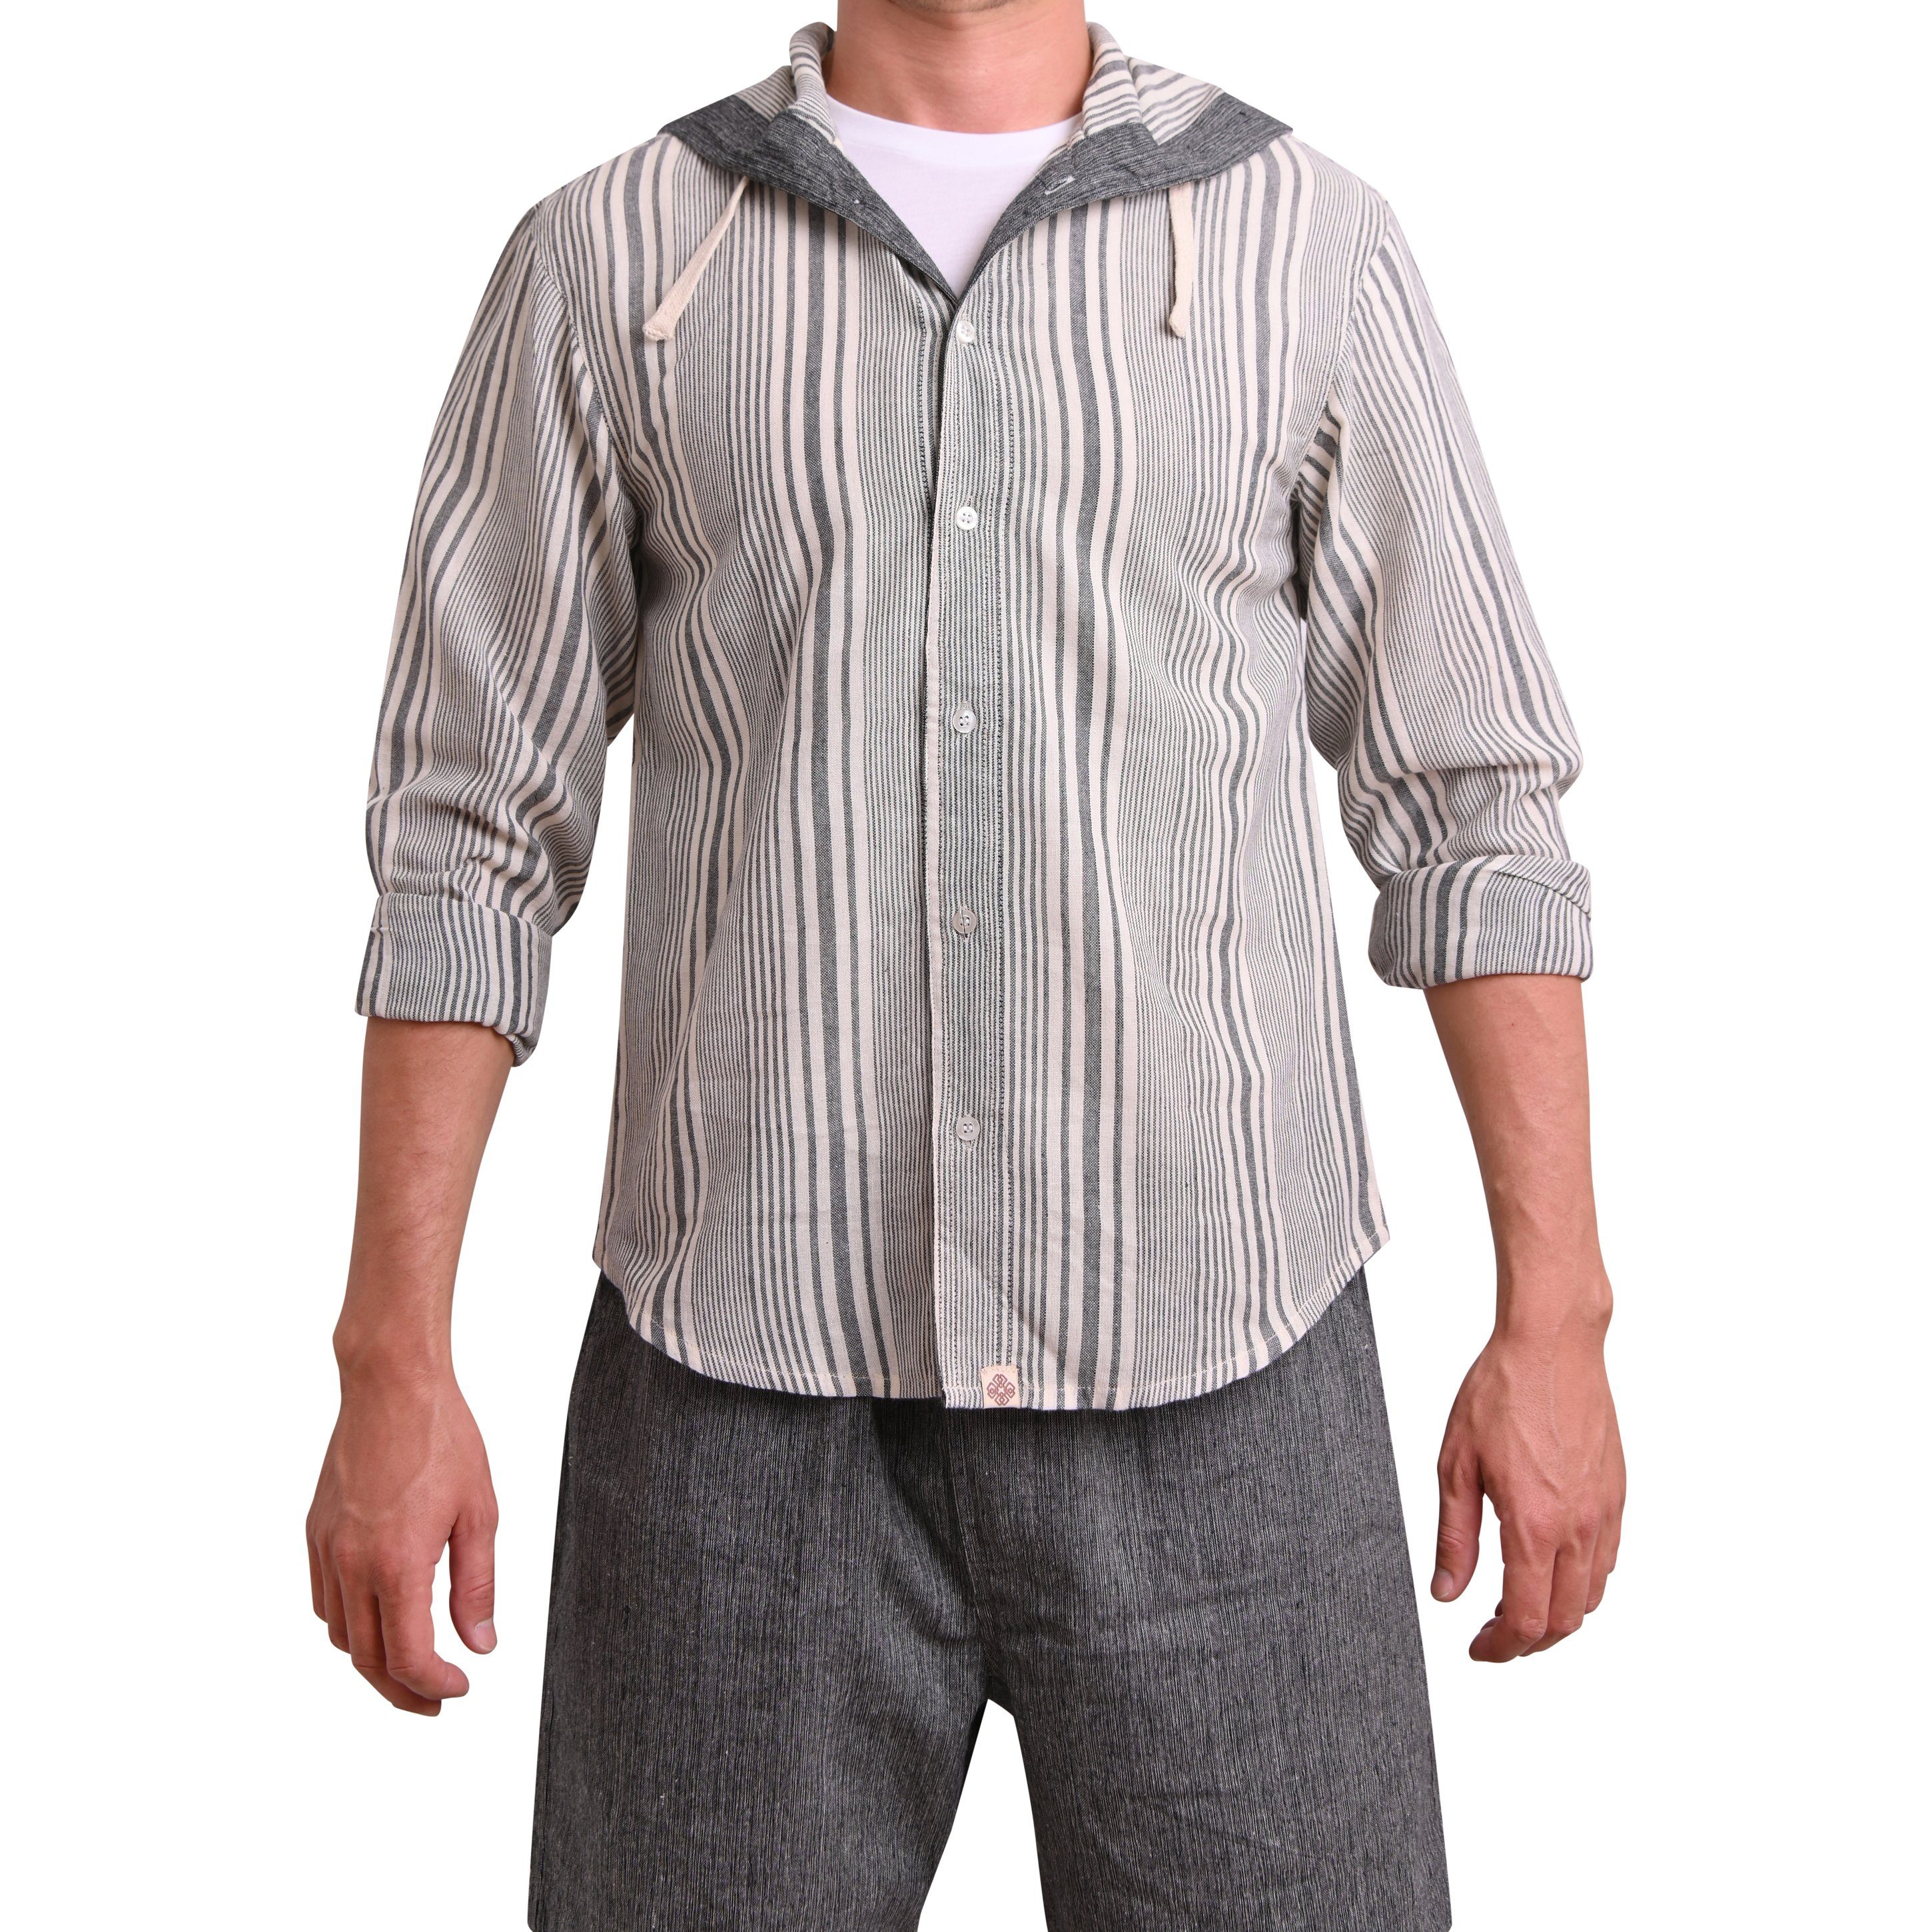 virblatt Kapuzenhemd Hemd grau Kapuze größenverstellbar Sommerhemd Hippie Kapuze Baumwolle, Herren, Herren